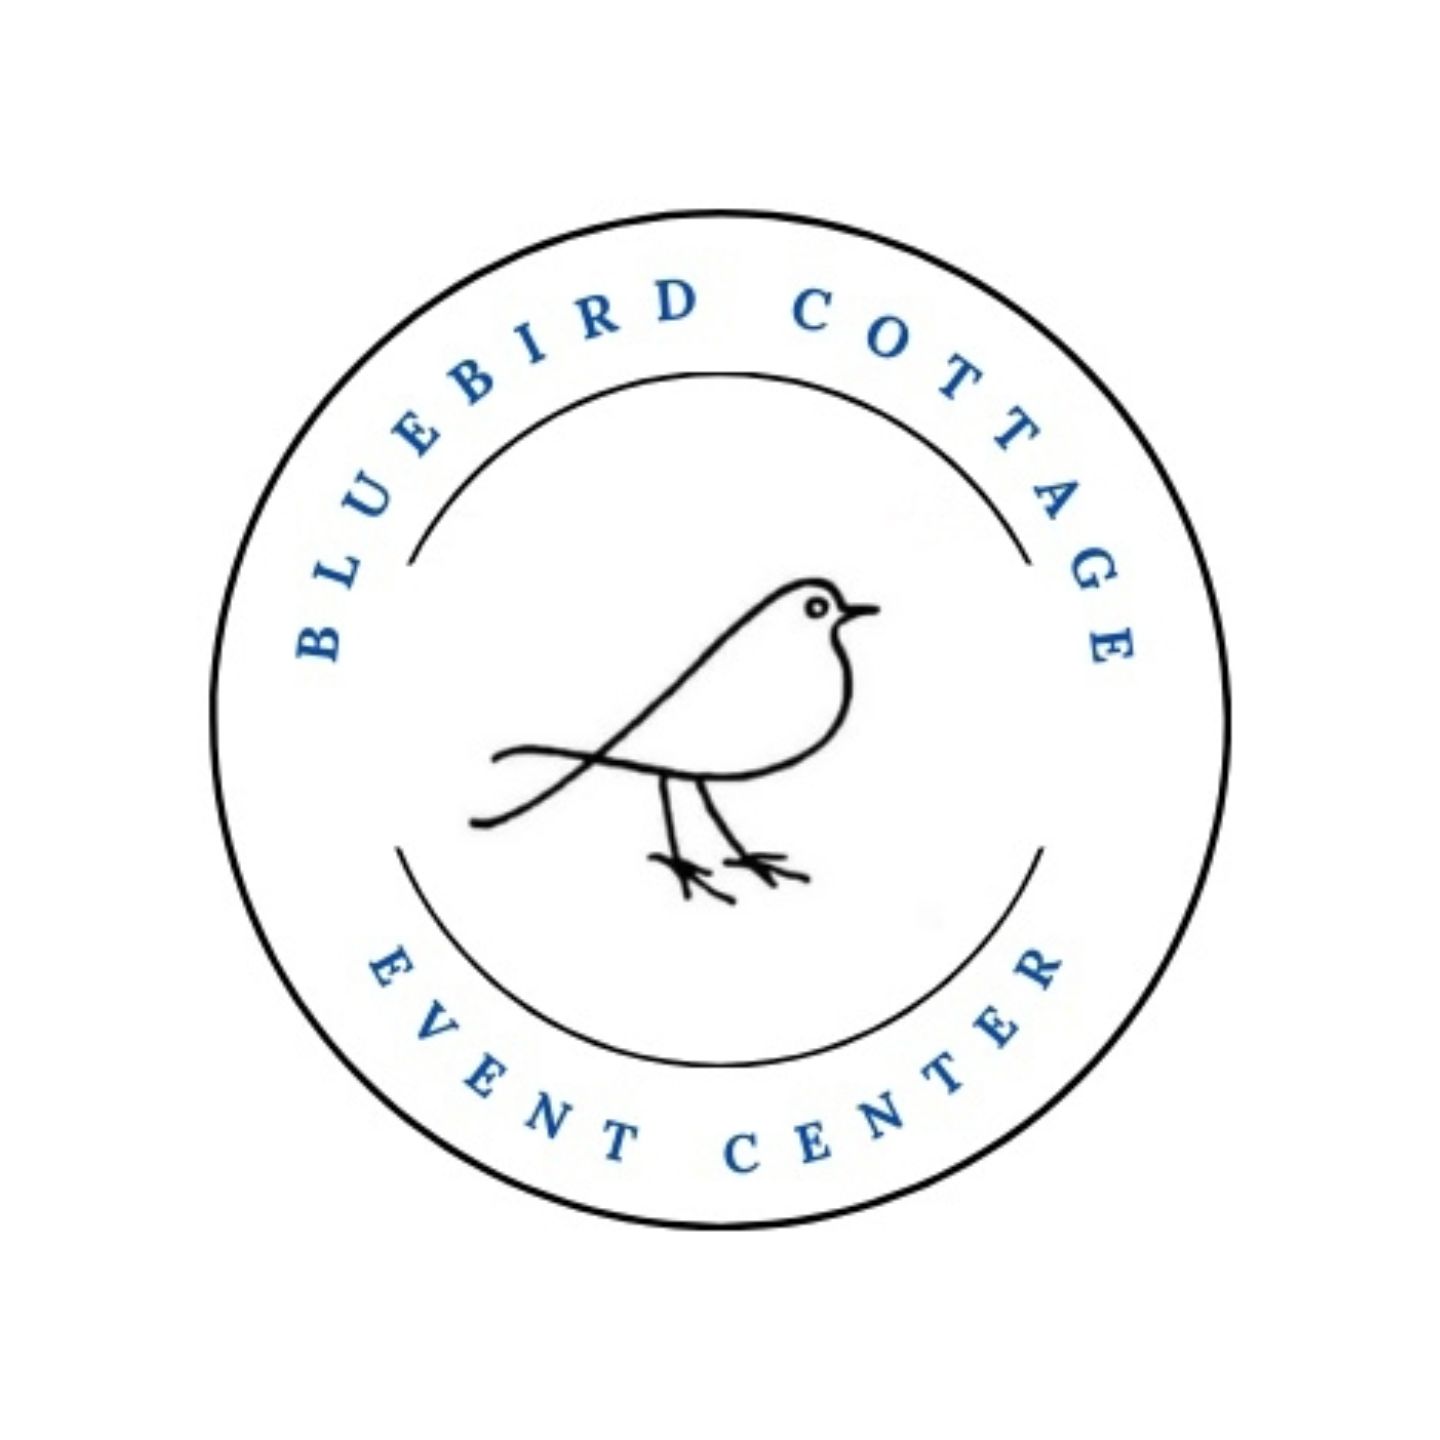 Bluebird Cottage Wedding Venue & Event Center